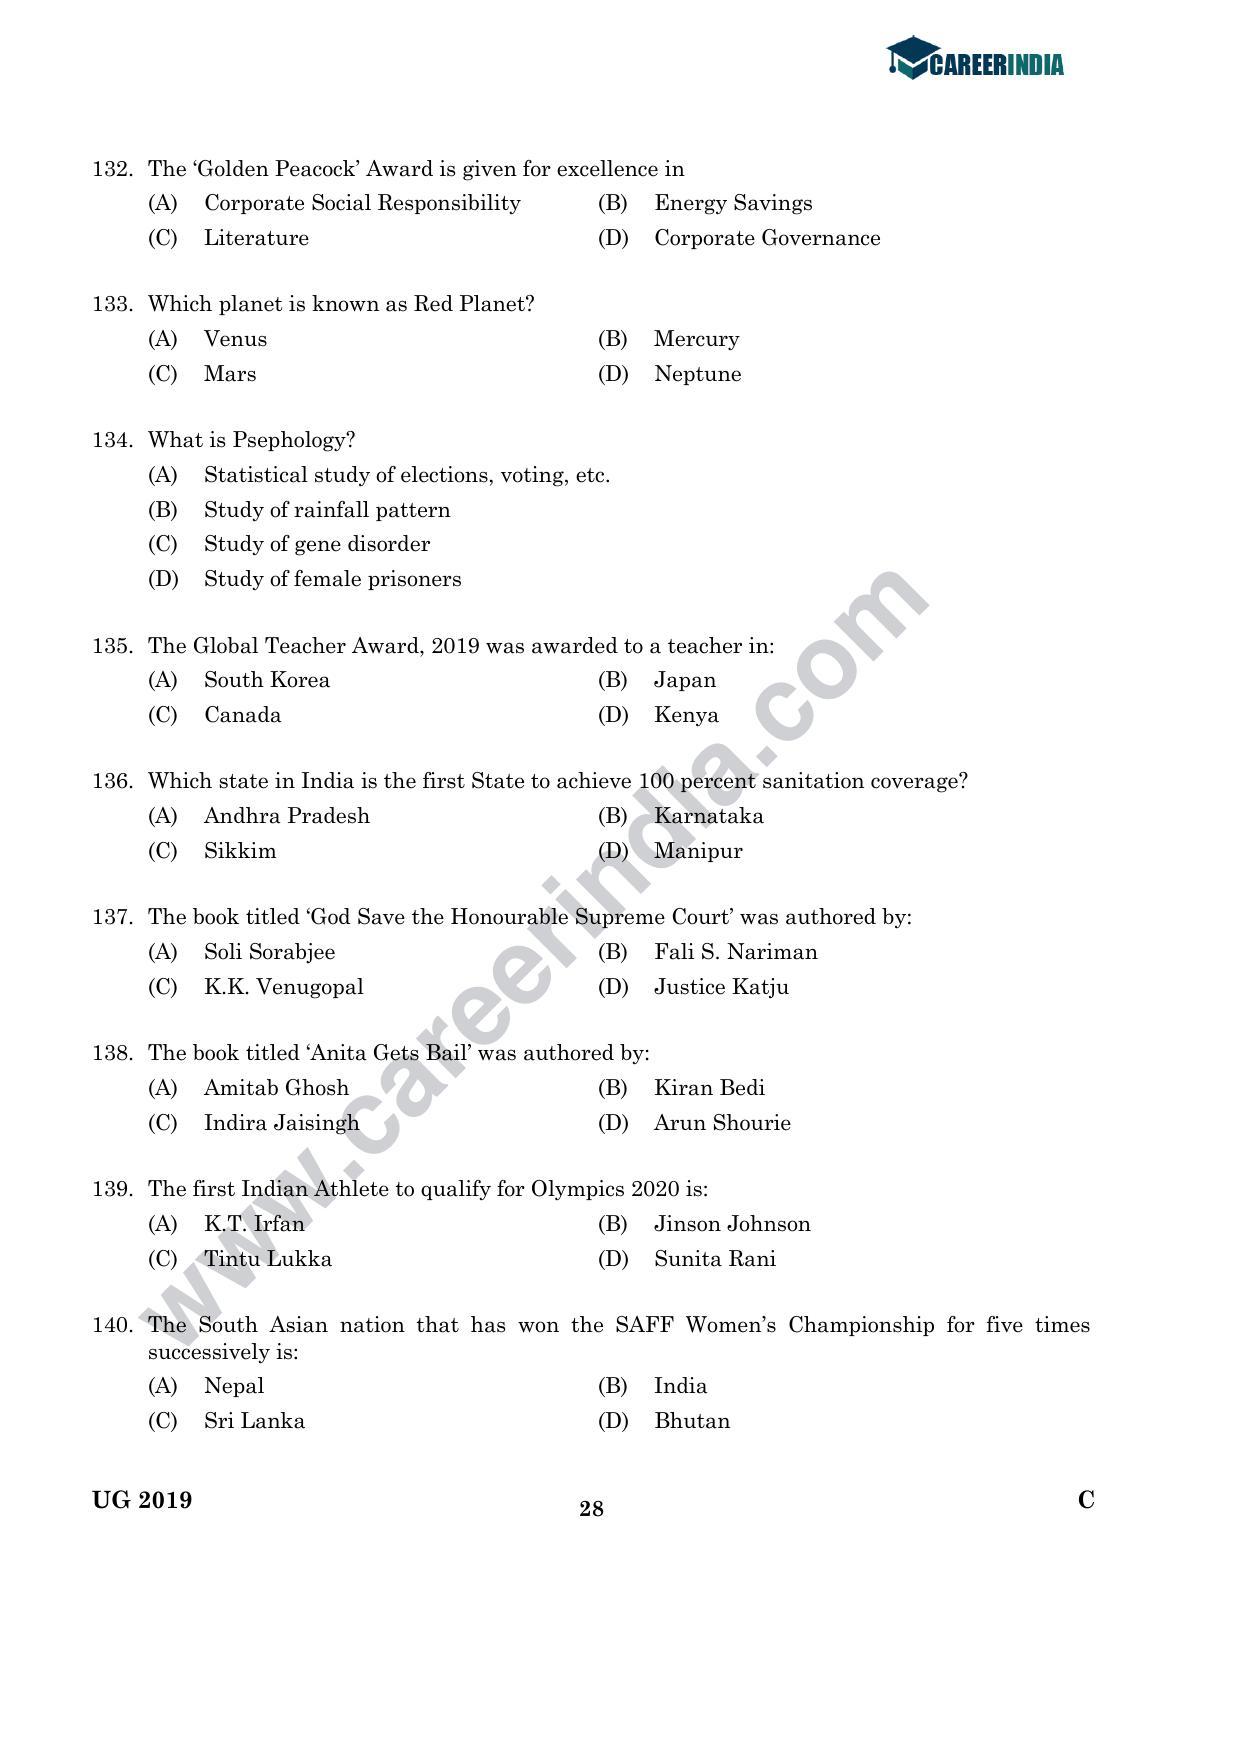 CLAT 2019 UG Legal-Aptitude Question Paper - Page 27